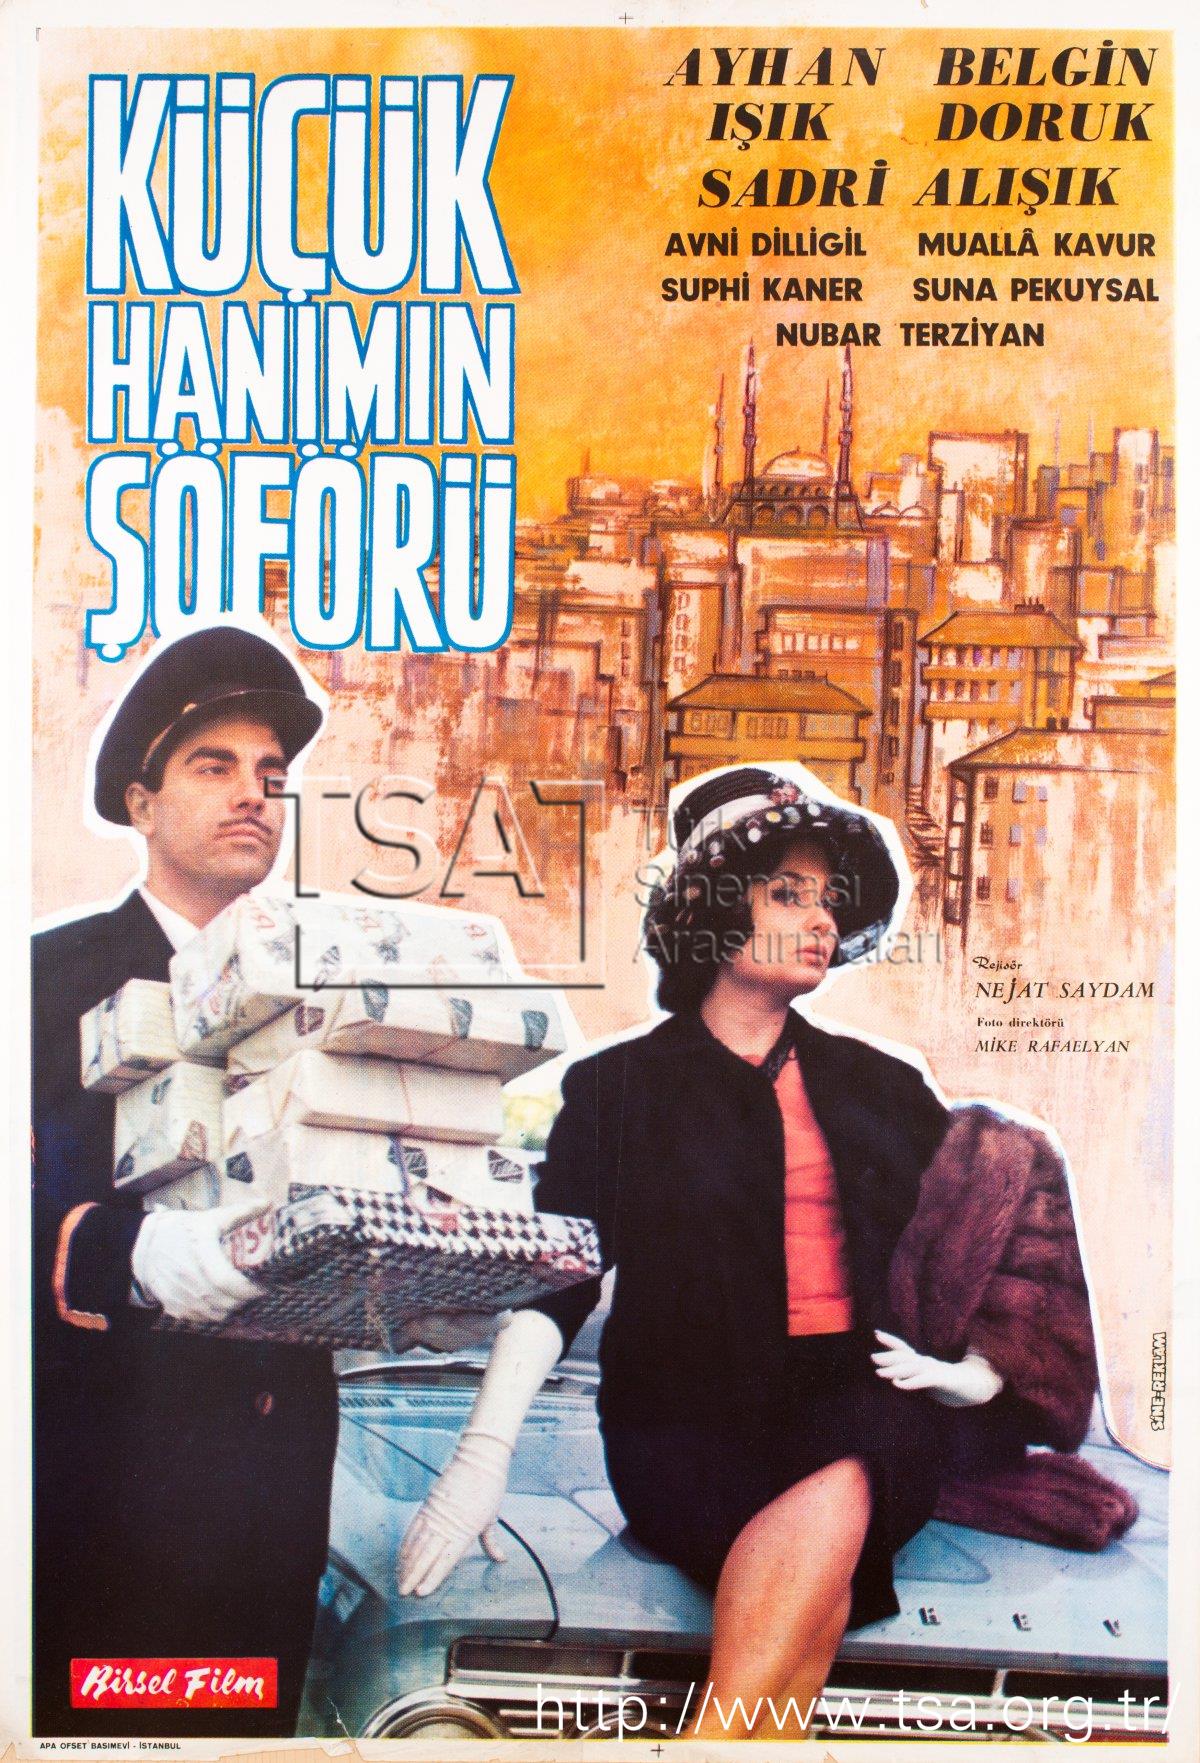 affiche du film Küçük hanimin soförü